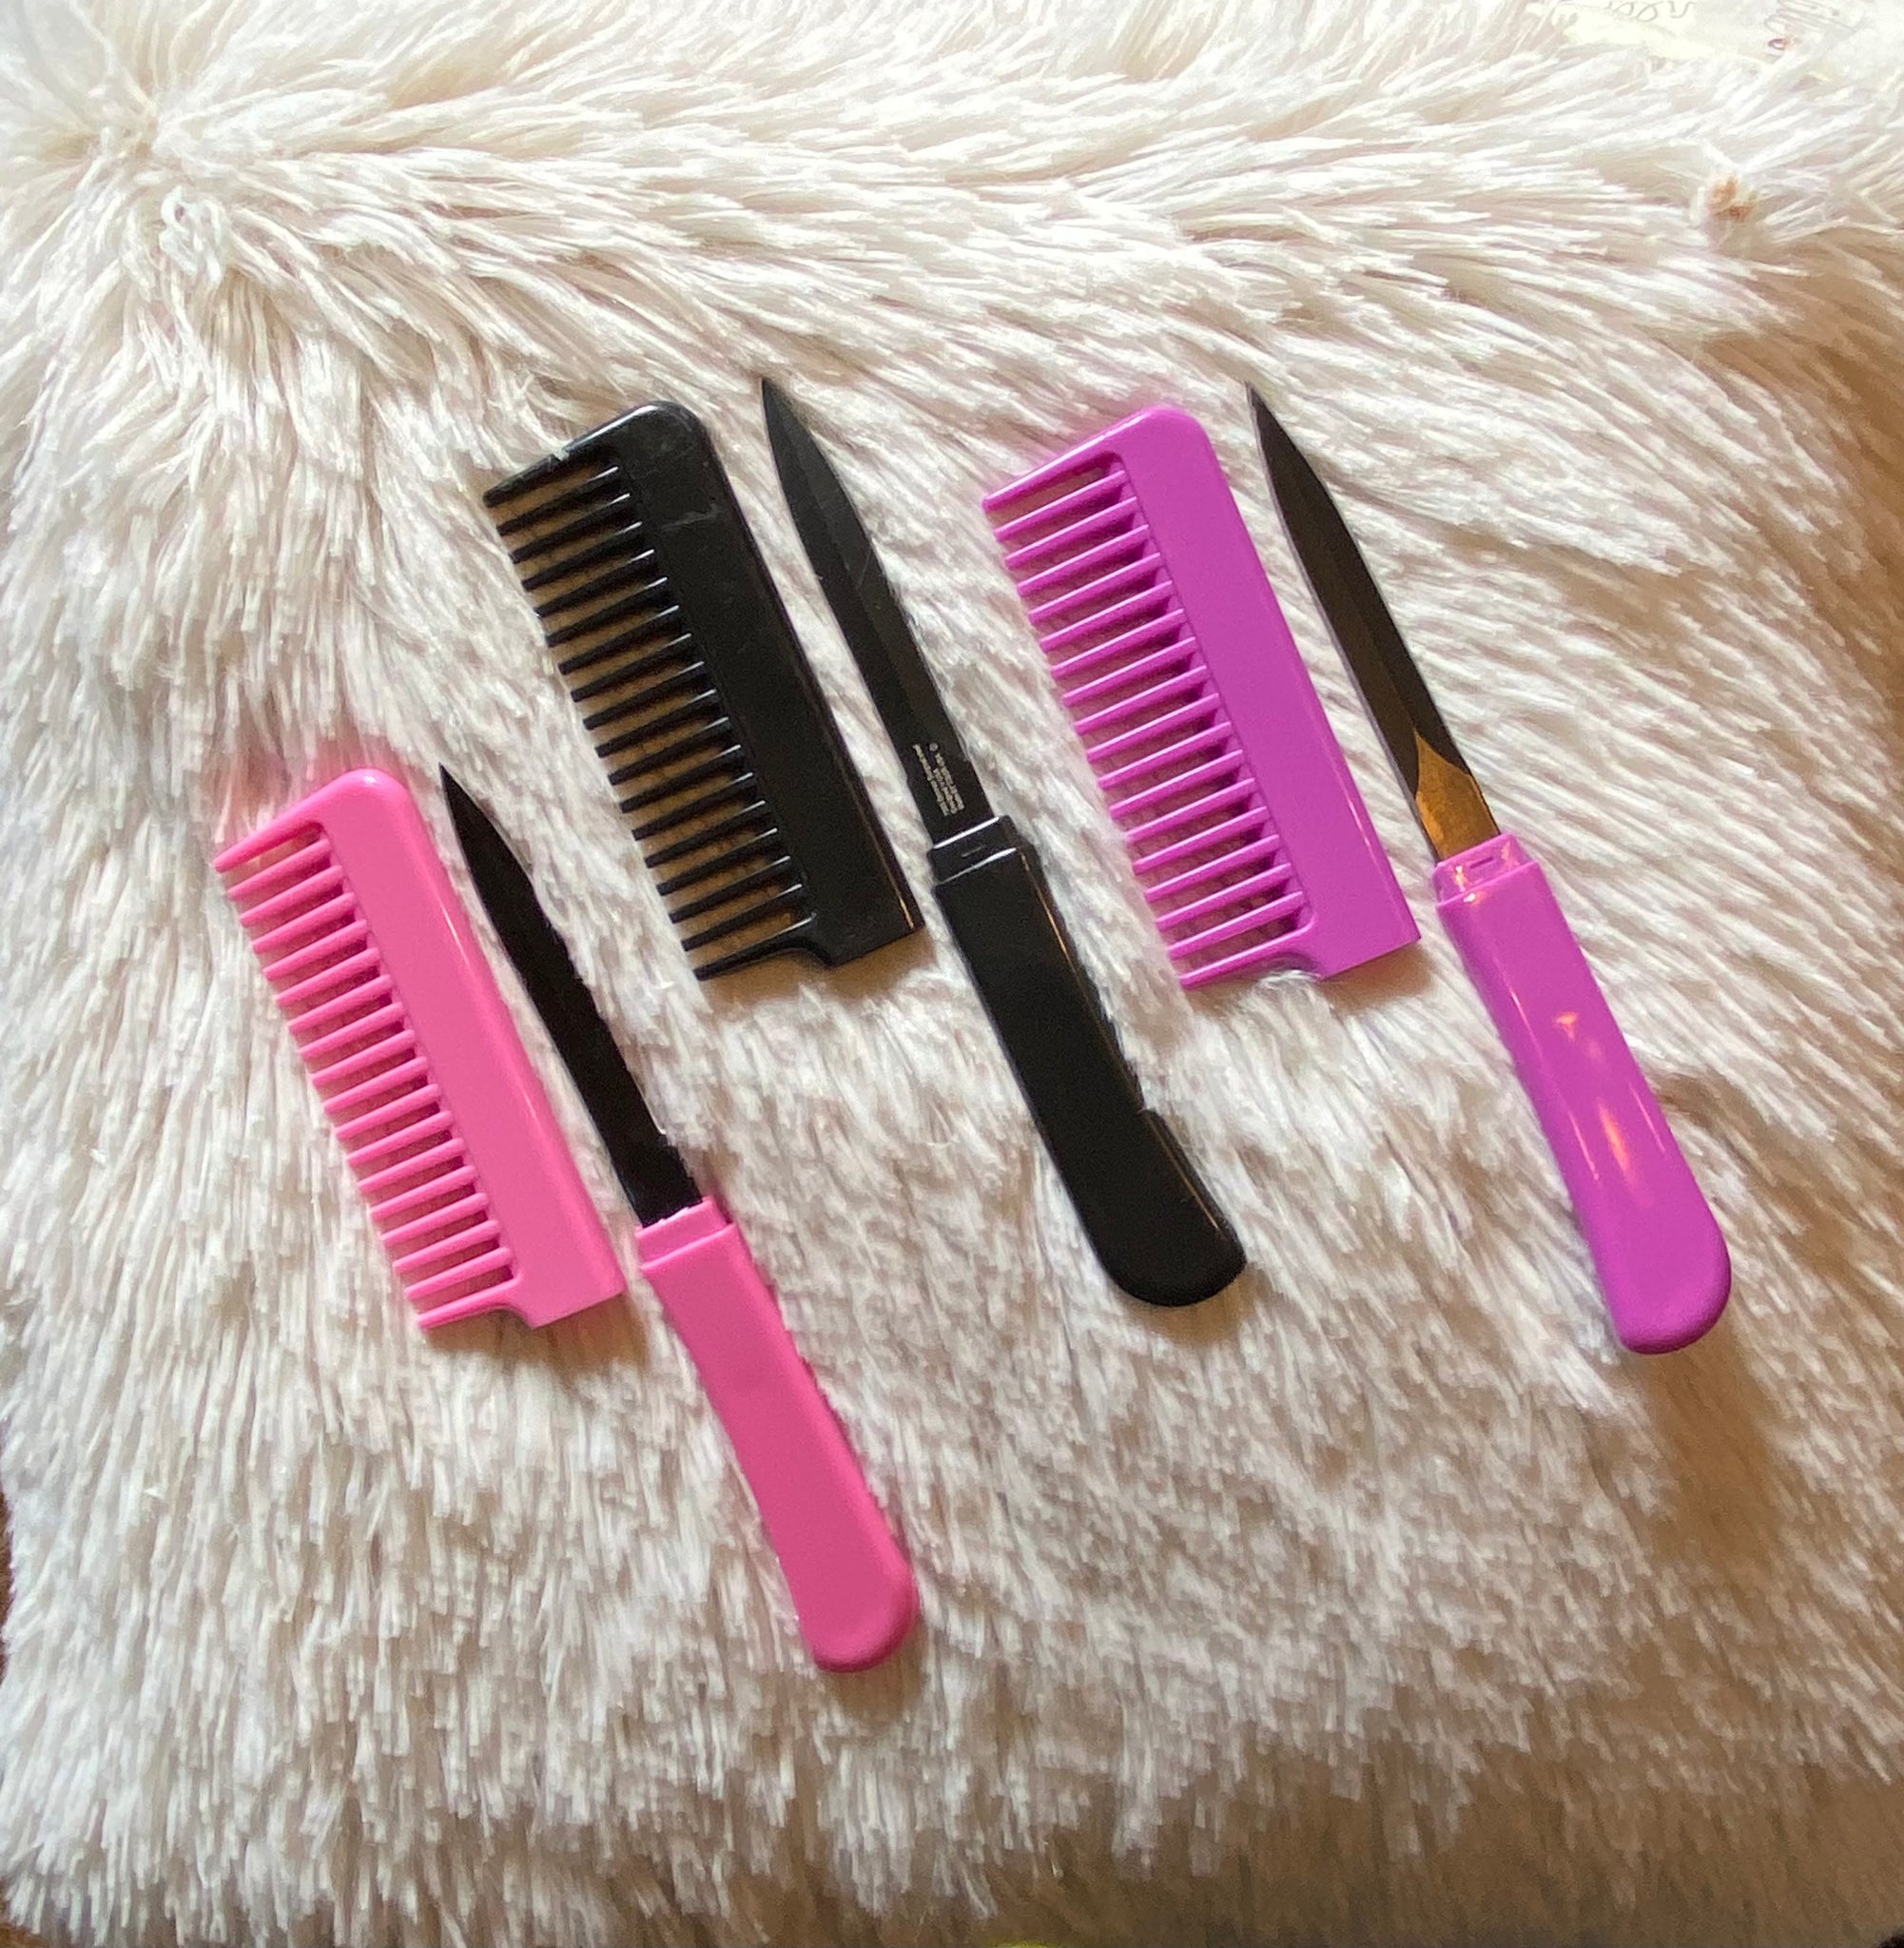 Secure Cosmetics Discrete Comb Knife Pink